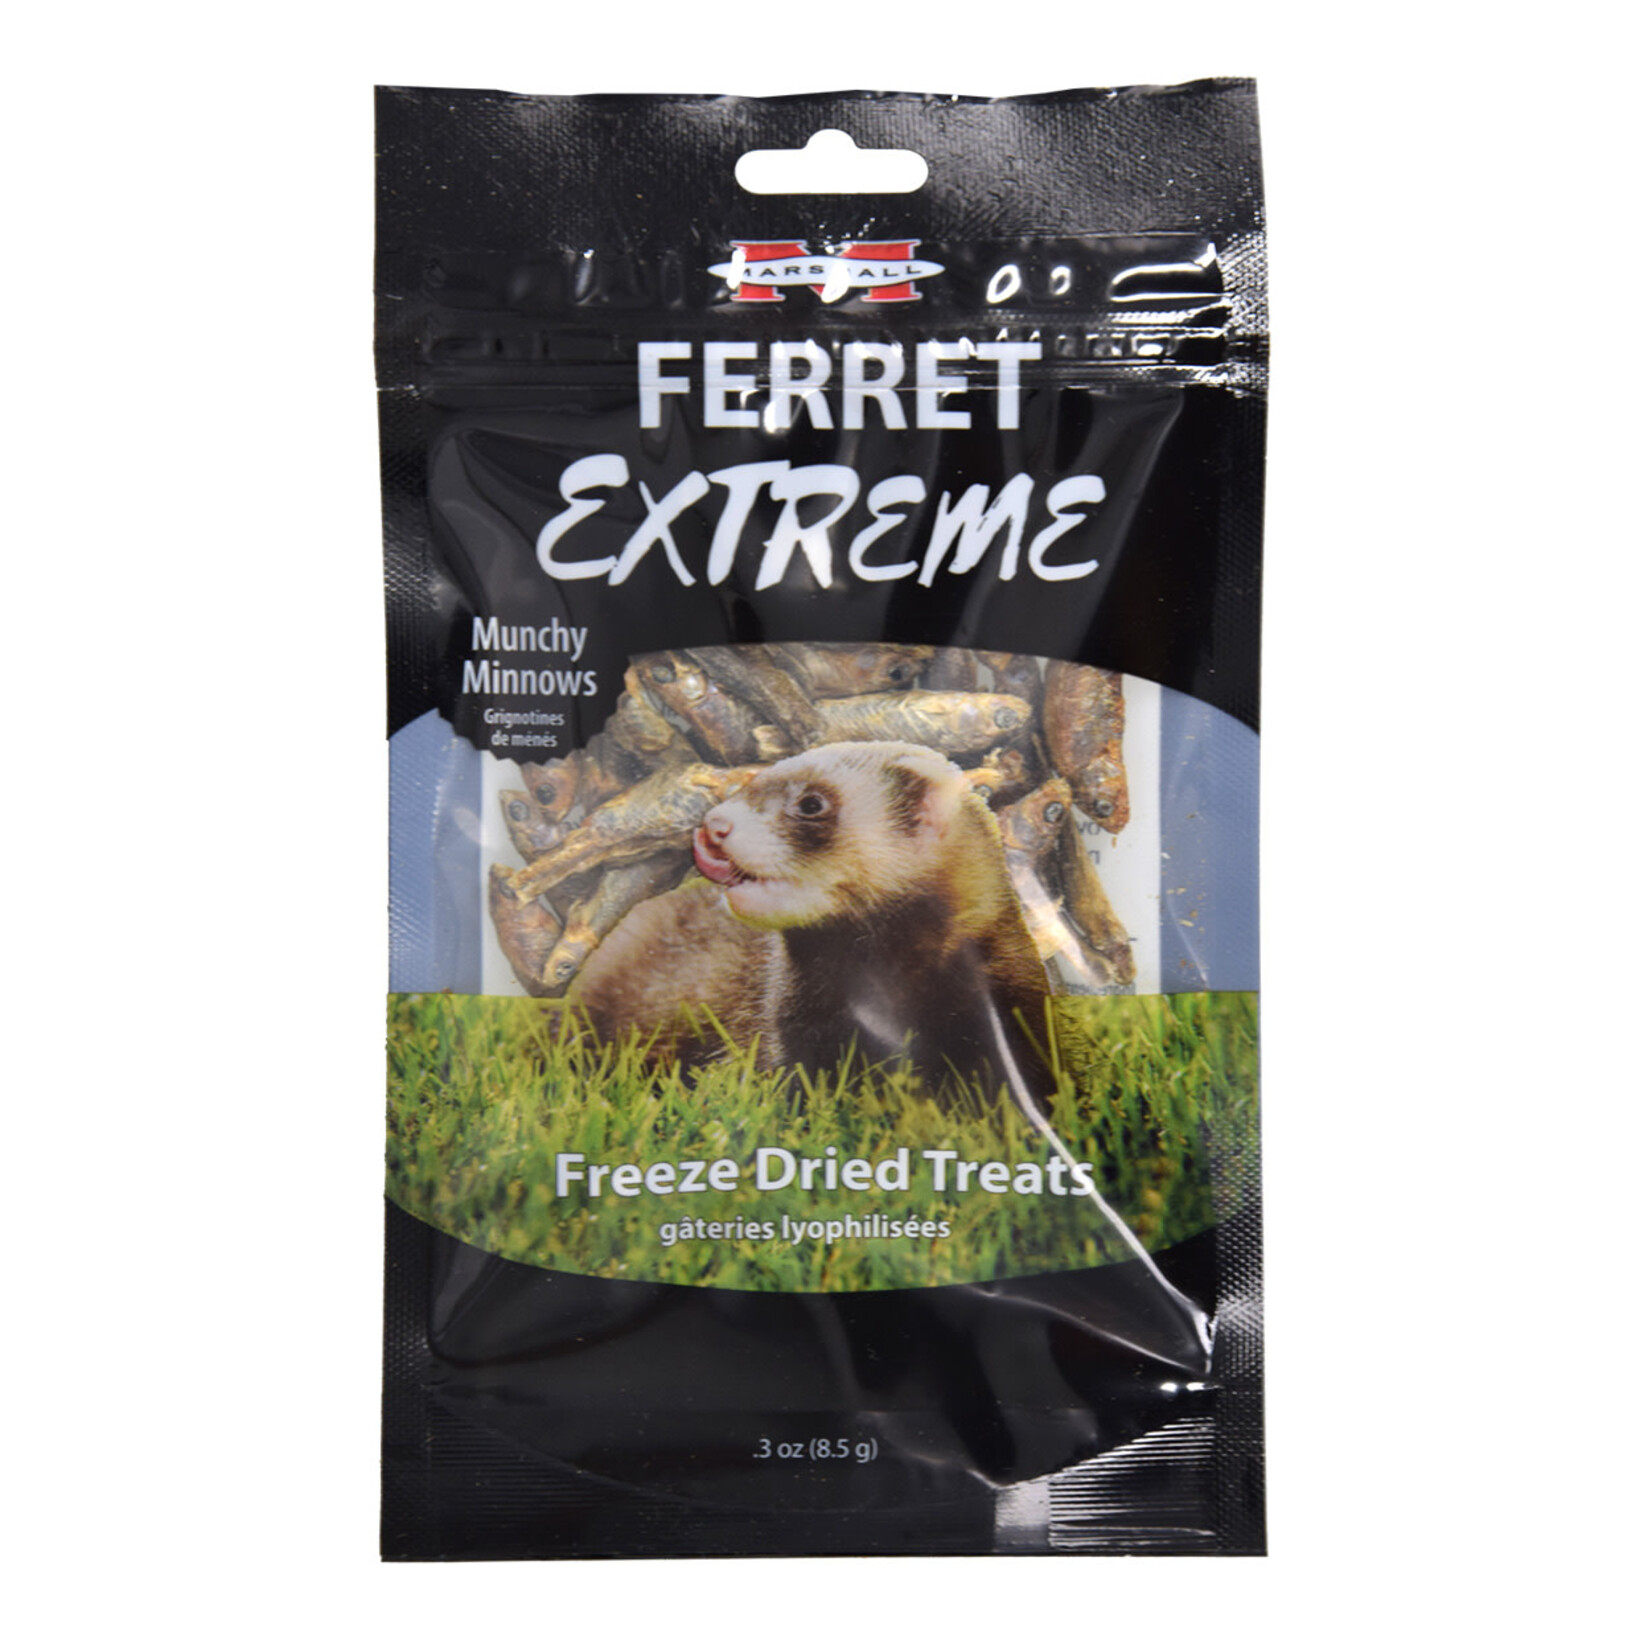 MARSHALL Marshall Ferret Extreme Freeze Dried Treats - Munchy Minnows - 3 oz